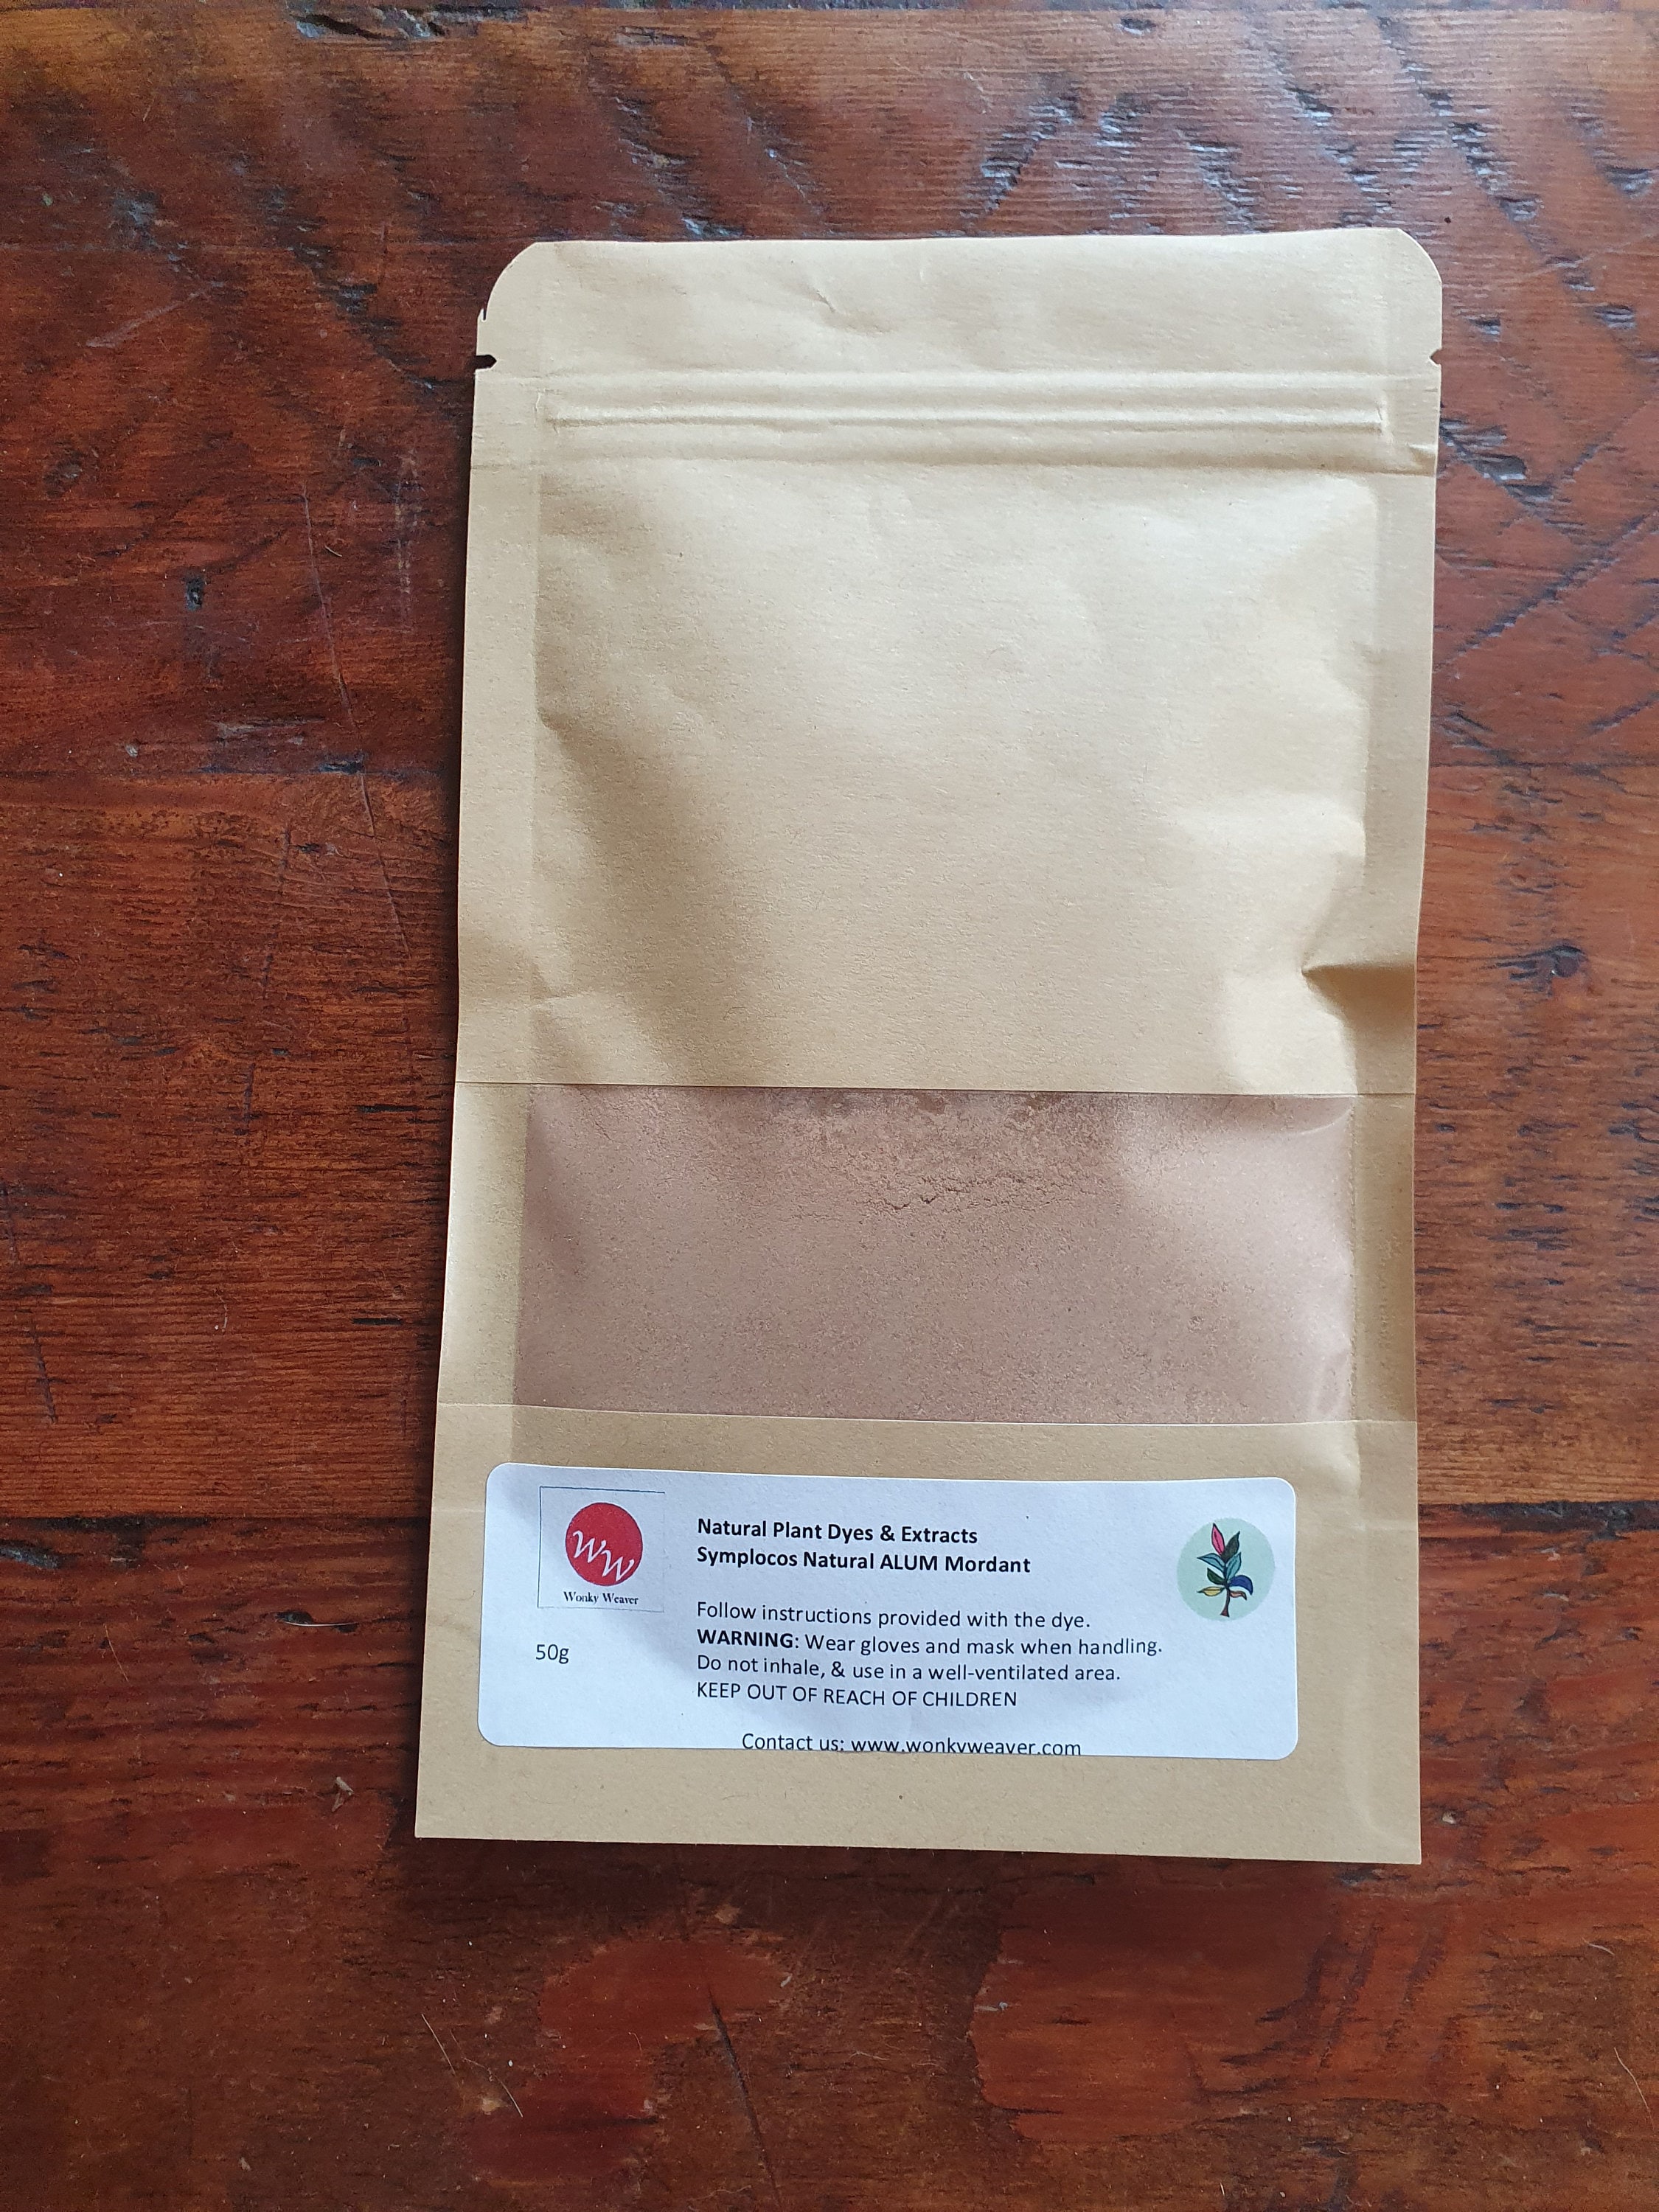 1 Pound Lambda Carrageenan Powder Supplies for Marbling on Paper and Fabric  Irish Carrageen Moss Ebru Marbled Paper 